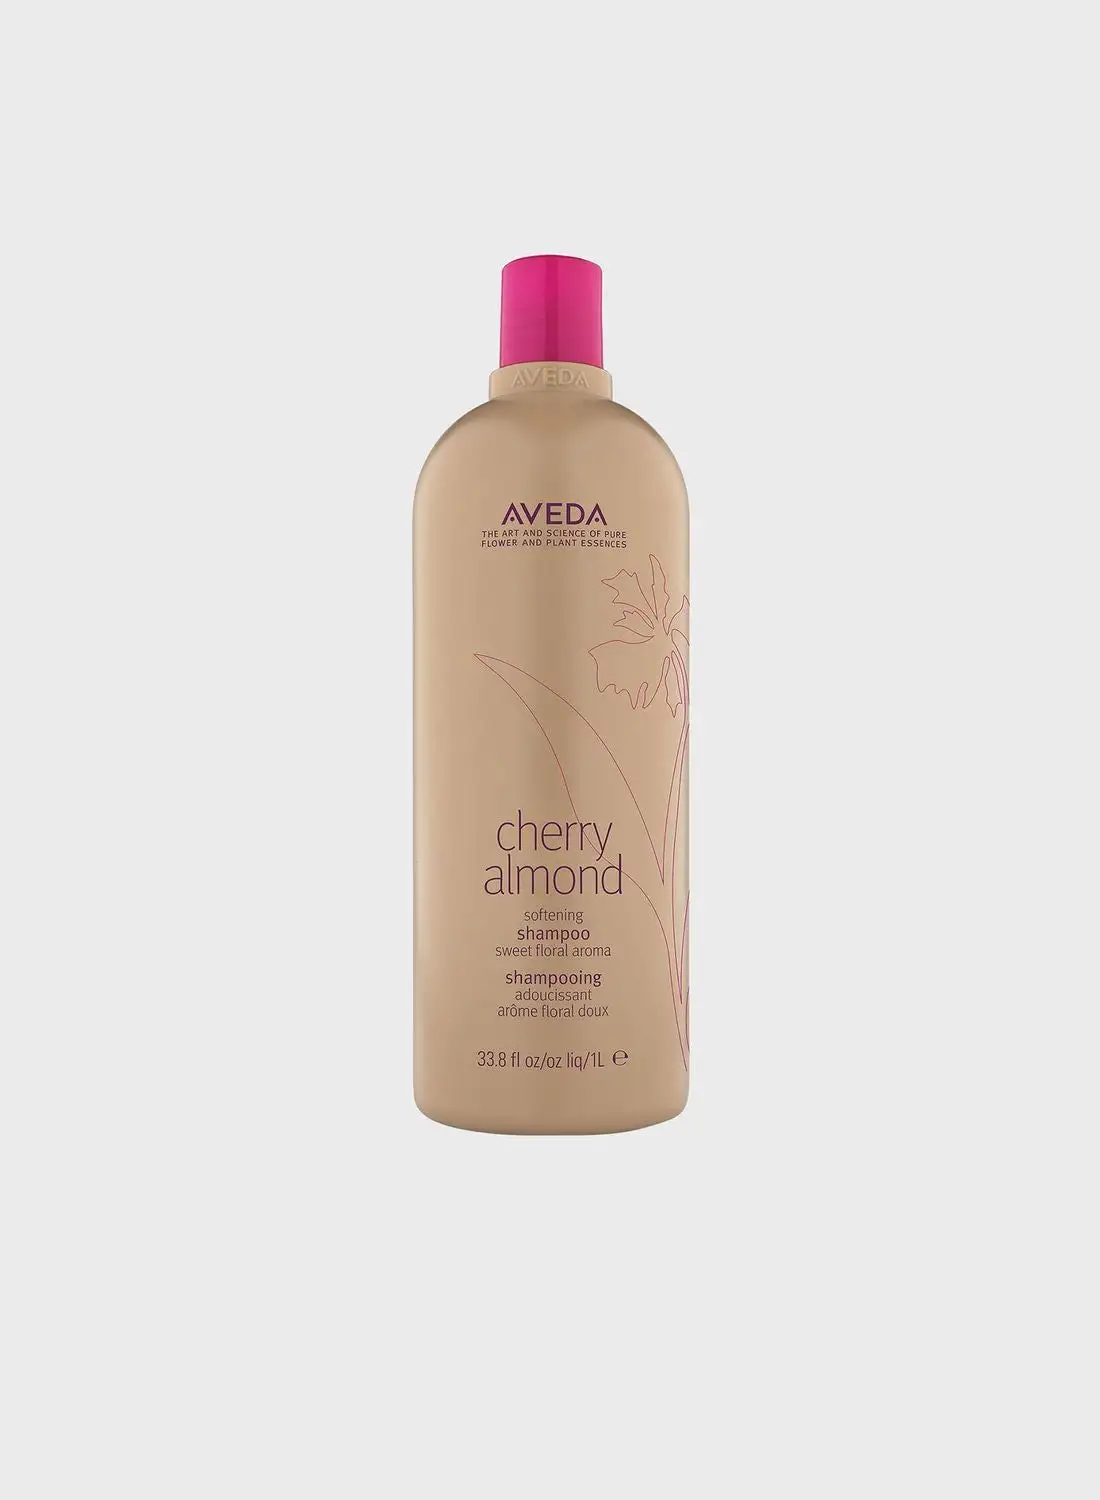 AVEDA Cherry Almond Softening Shampoo 1 Litre